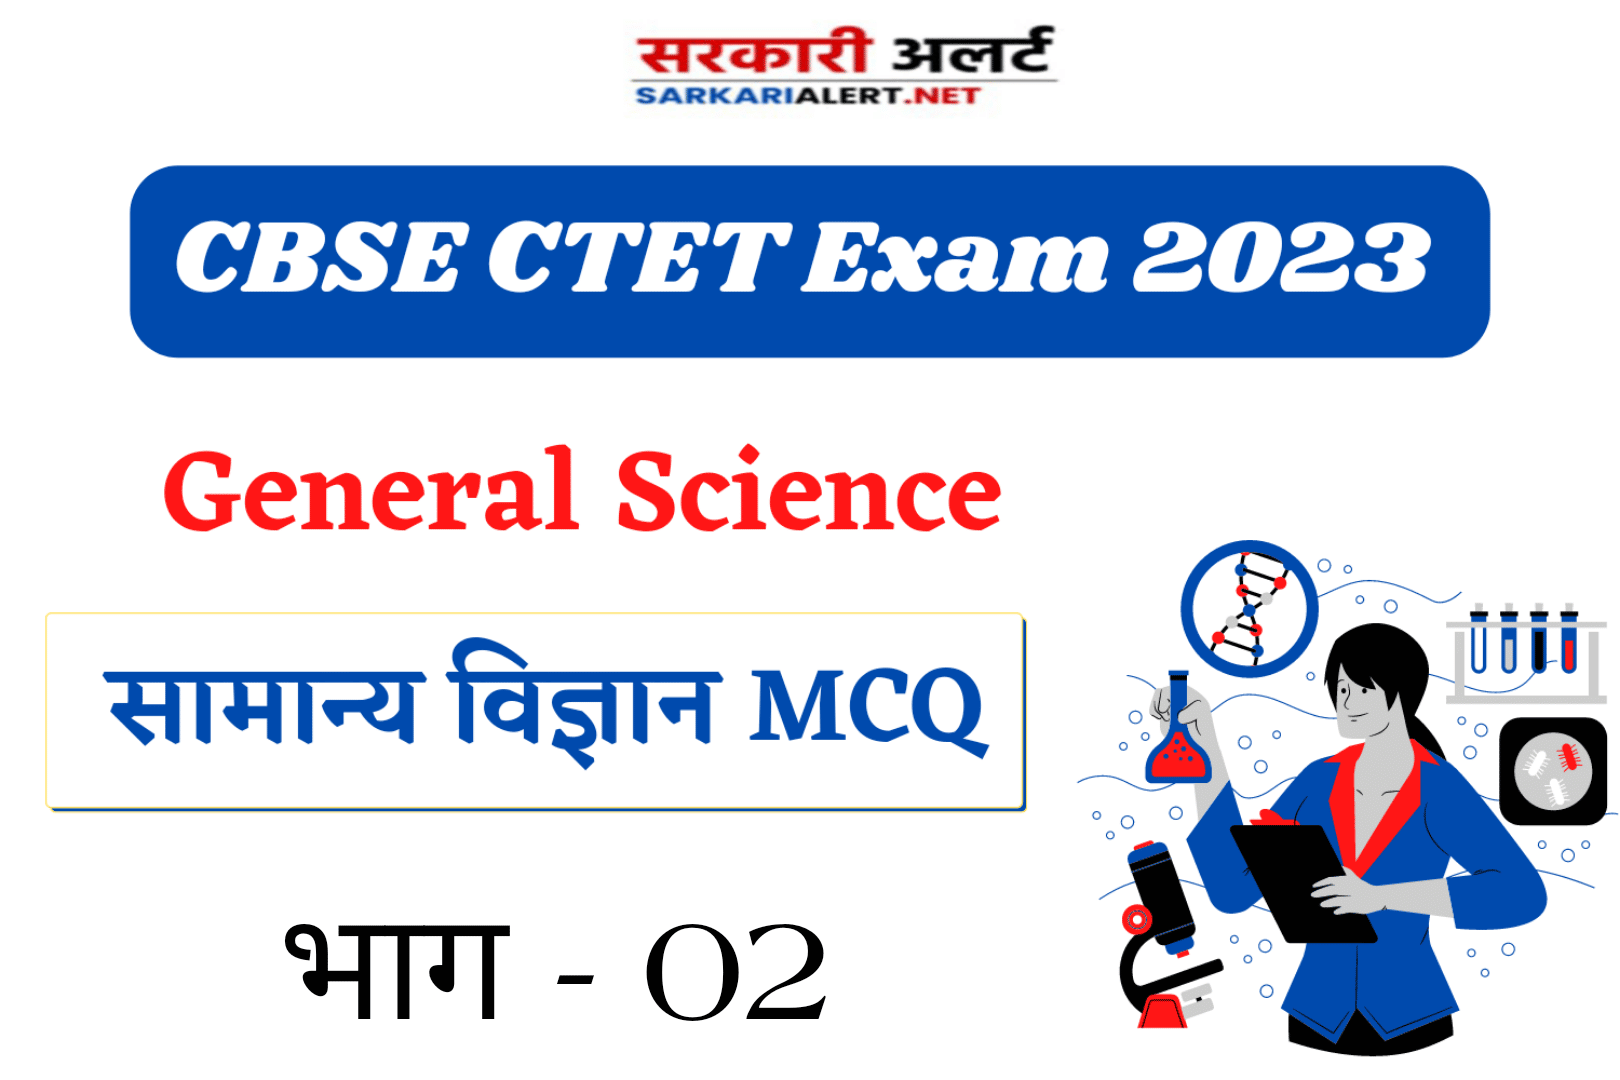 CBSE CTET Exam 2023, Science MCQ - 02 | सामान्य विज्ञान के महत्वपूर्ण प्रश्न